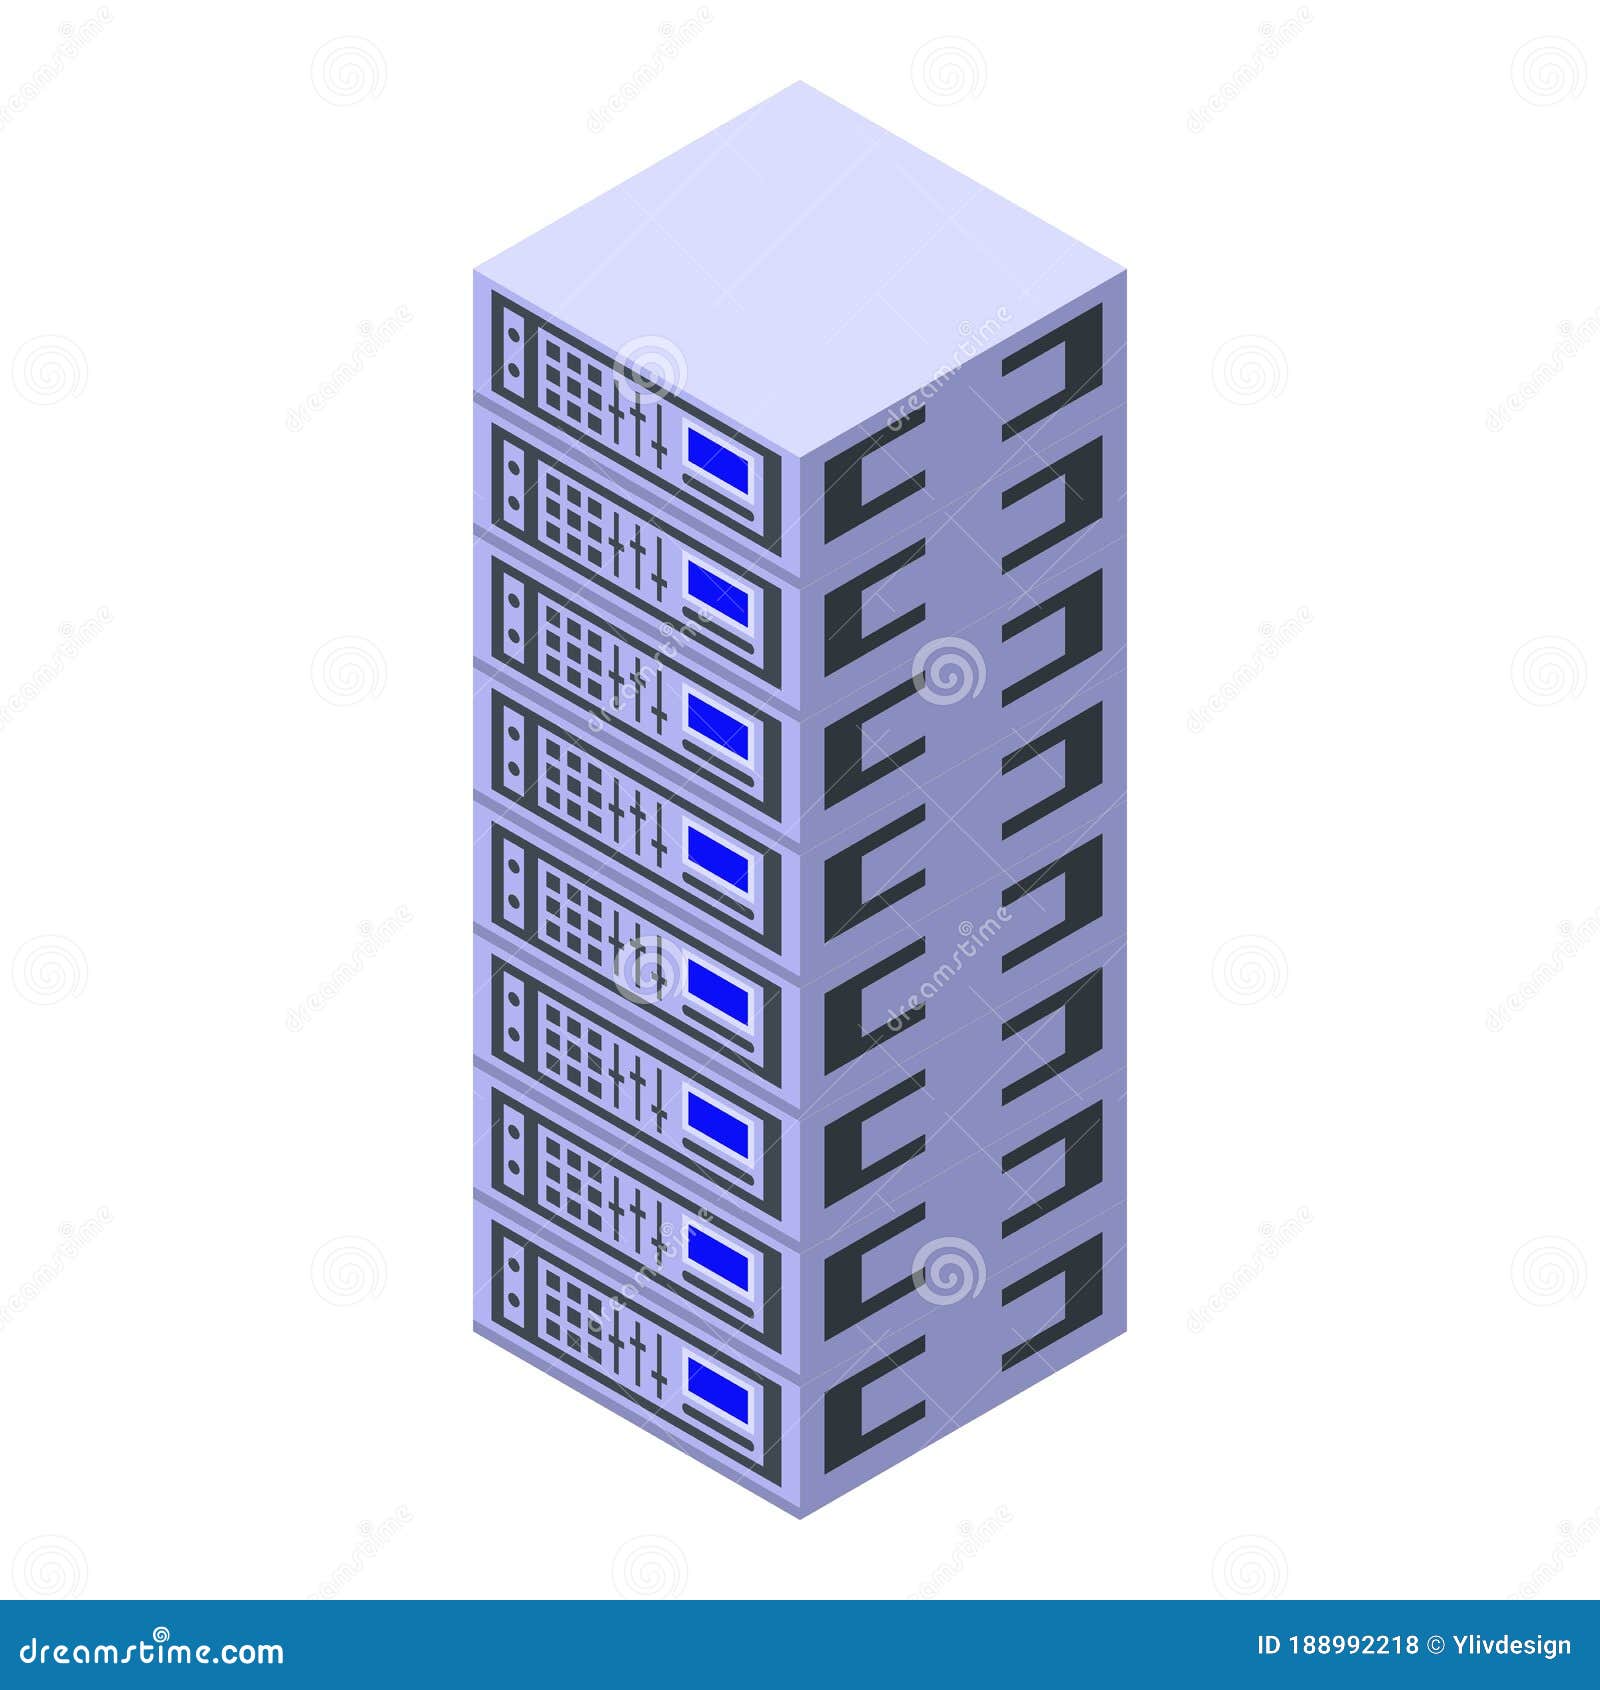 Broker Server Rack Icon, Isometric Style Stock Vector ...